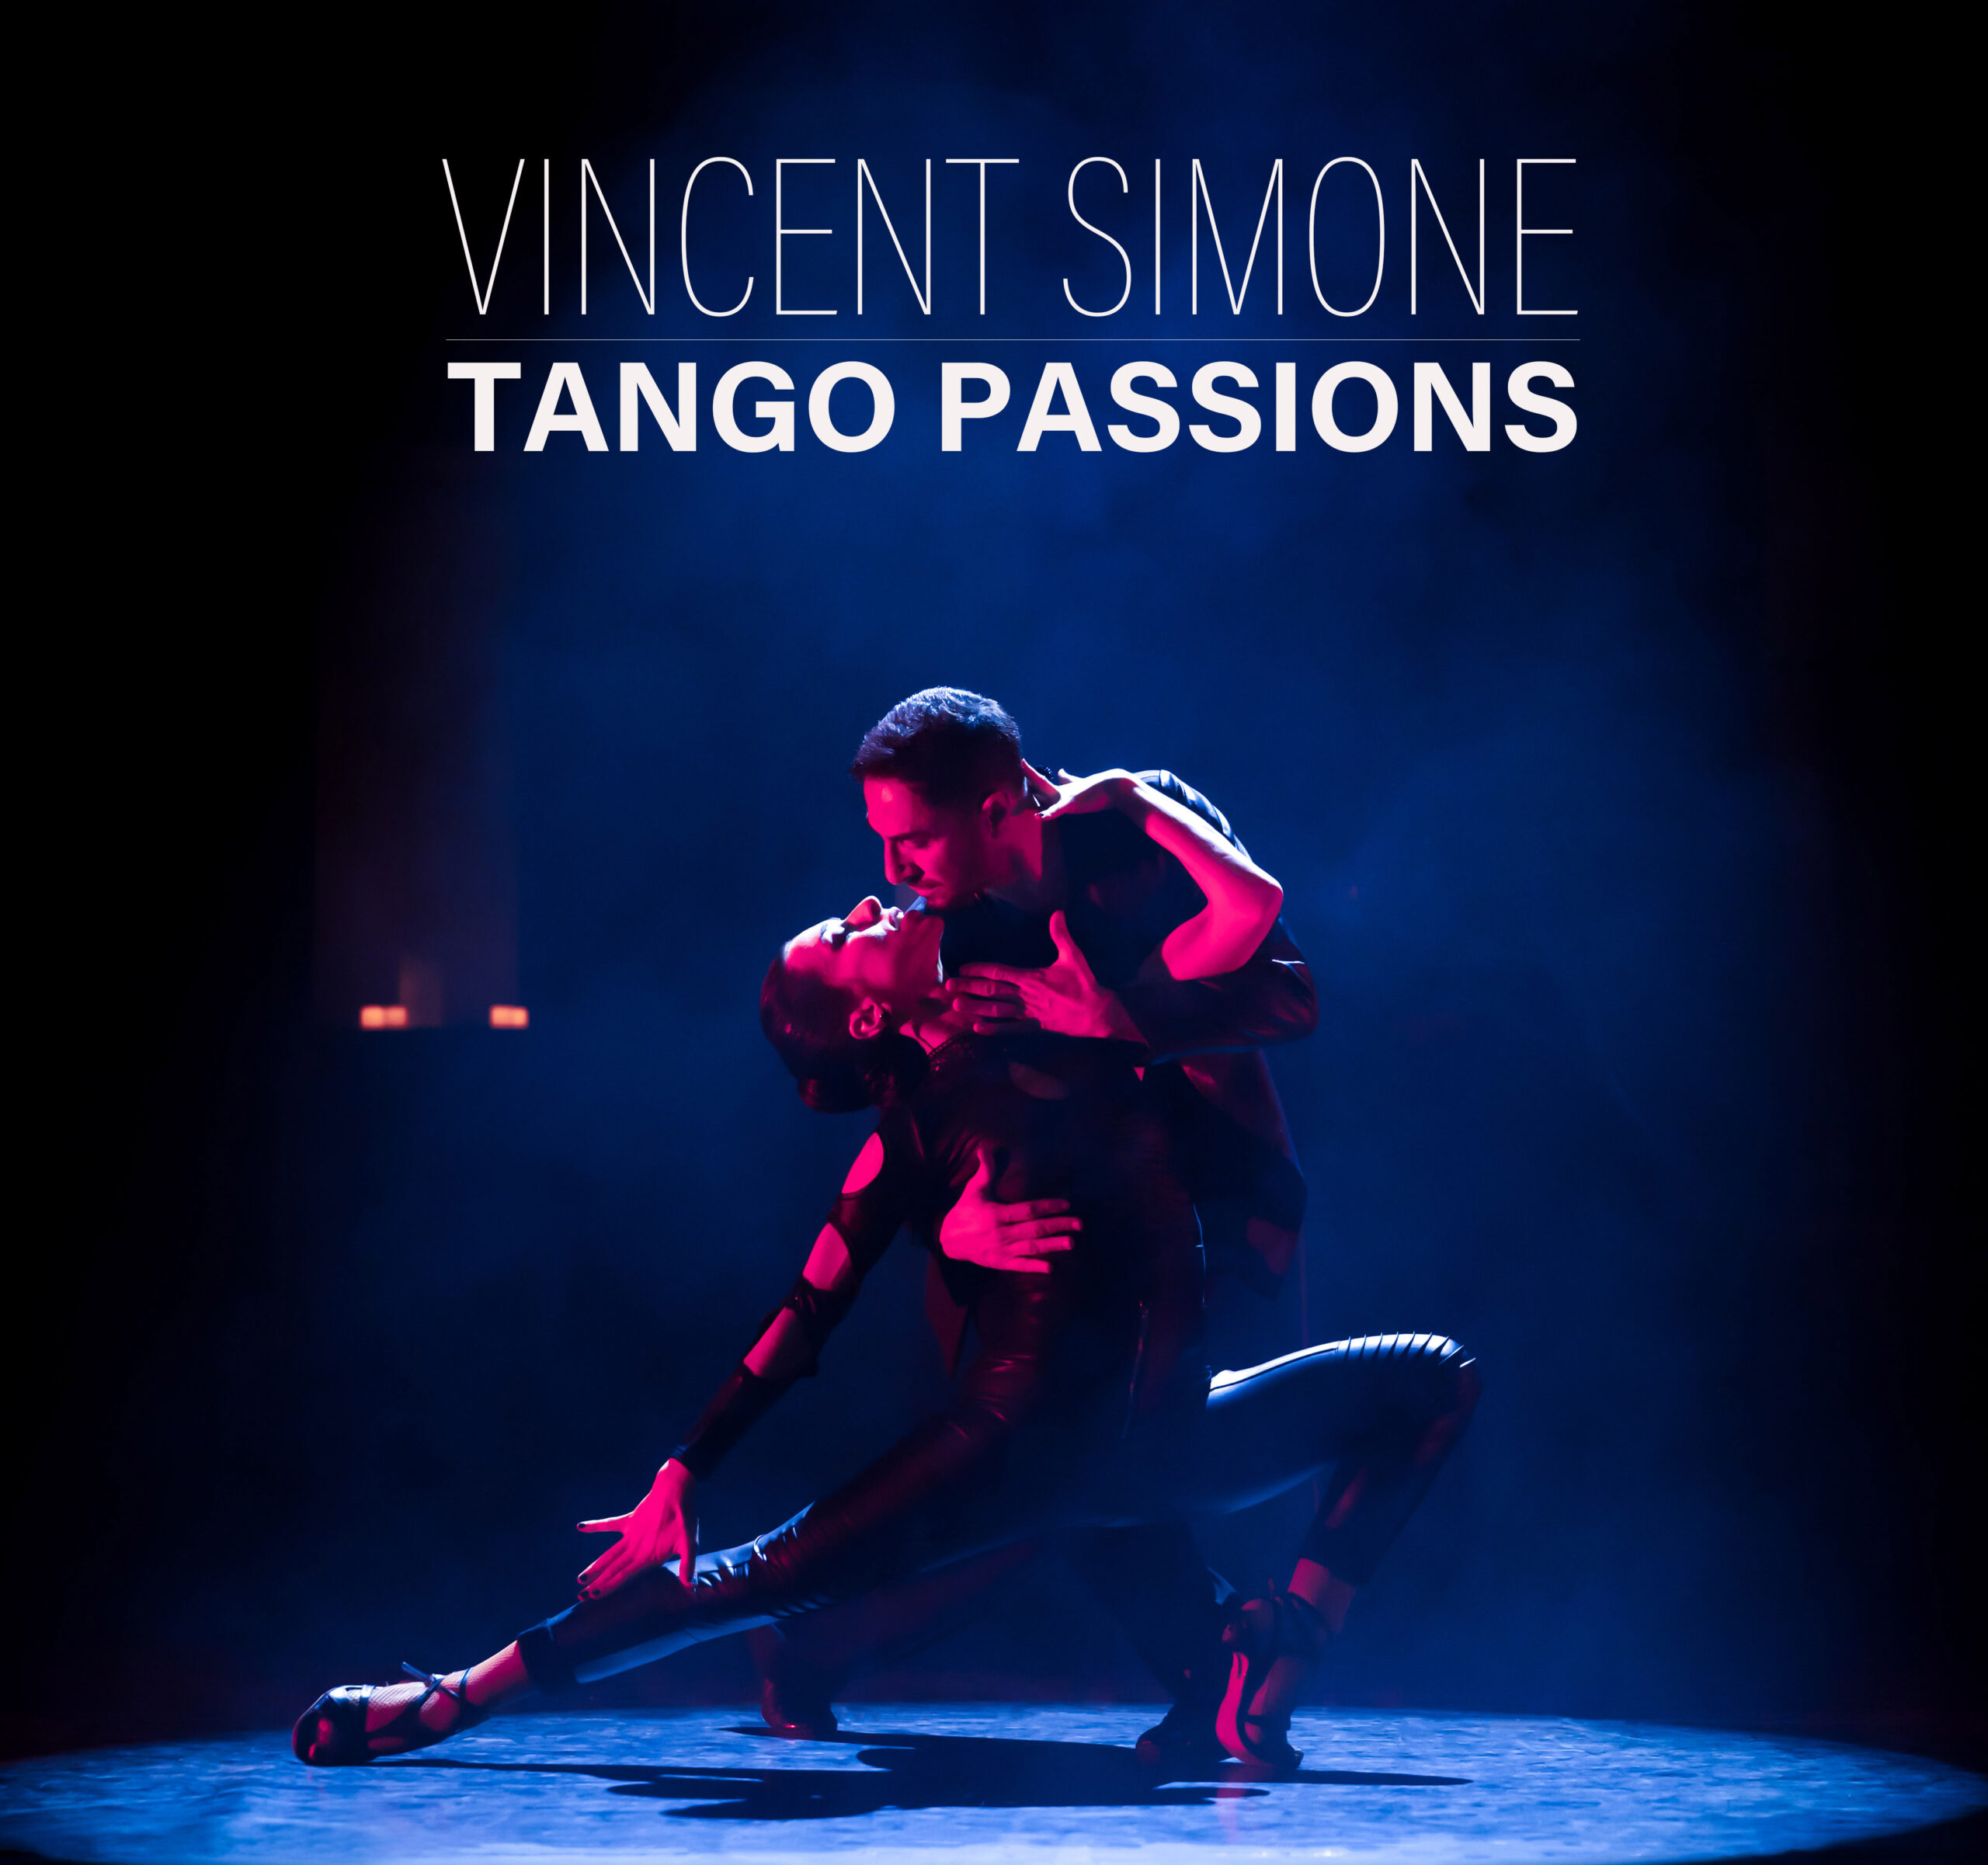 Tango Passions